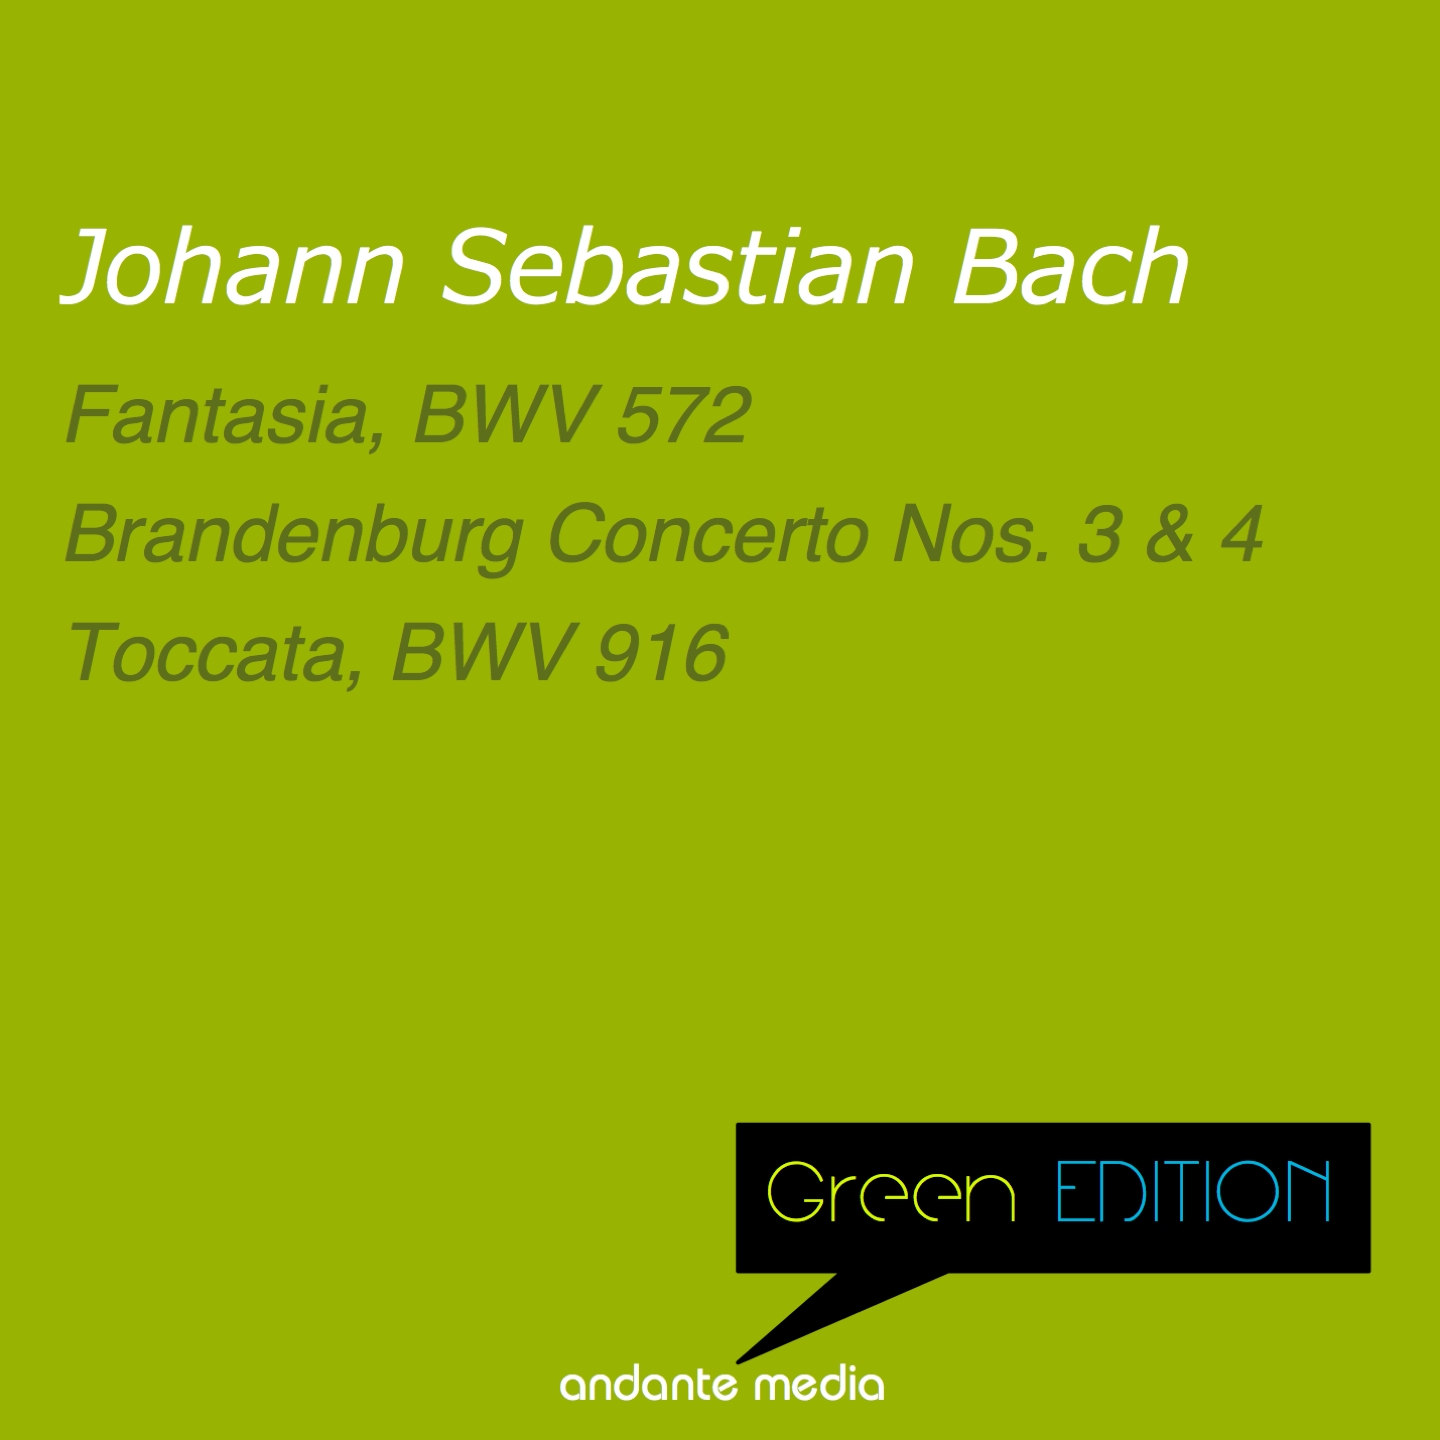 Green Edition - Bach: Fantasia, BWV 572 & Toccata, BWV 916